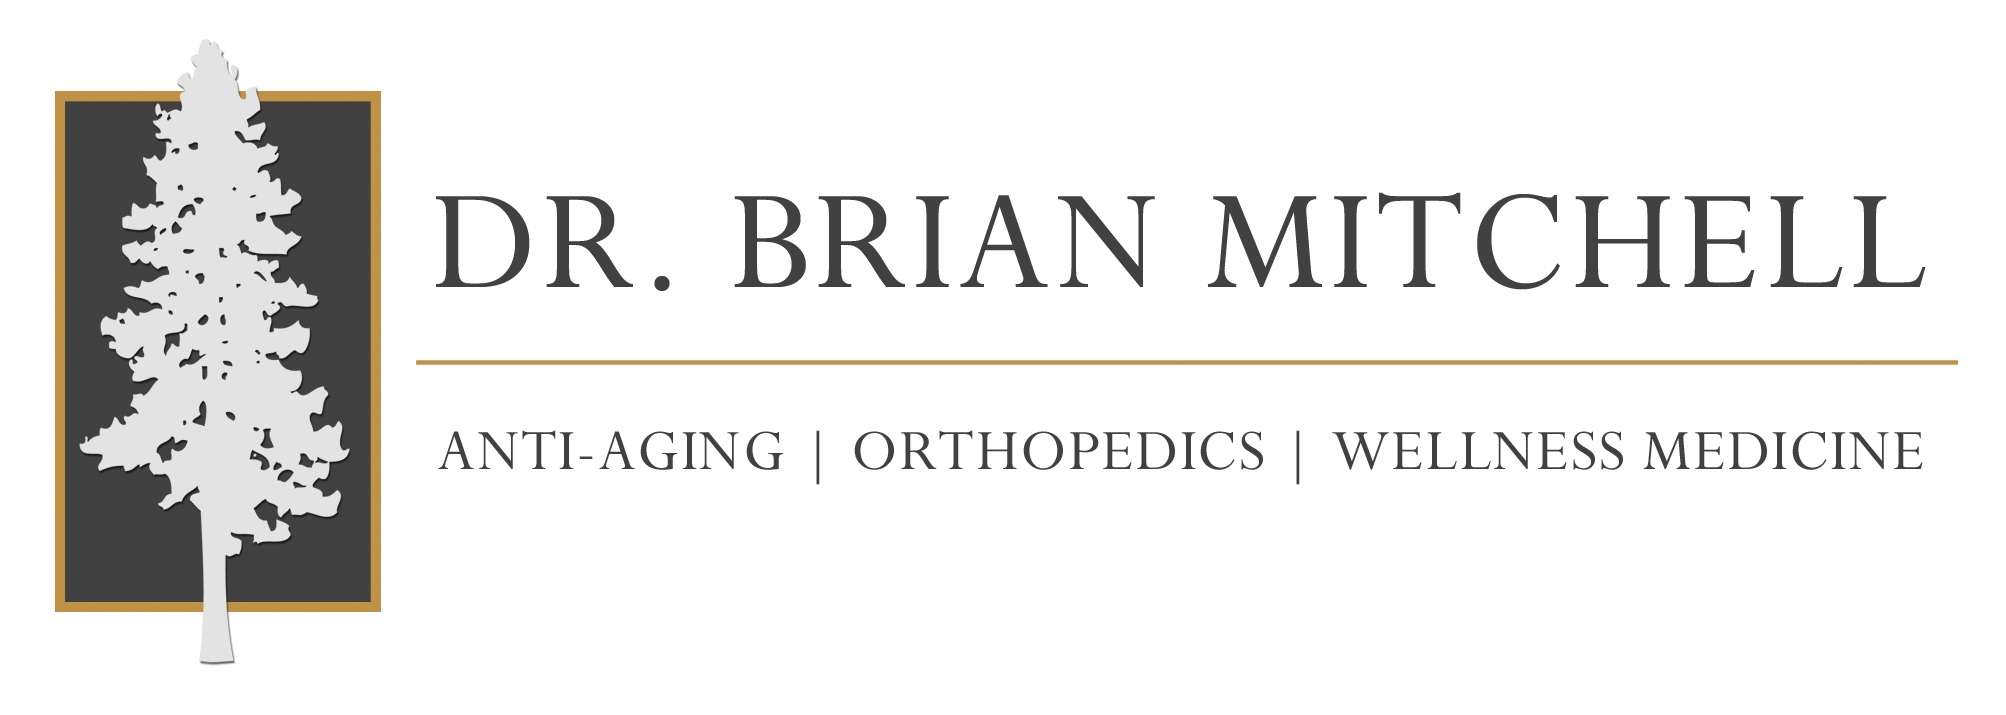 Dr. Brian Mitchell